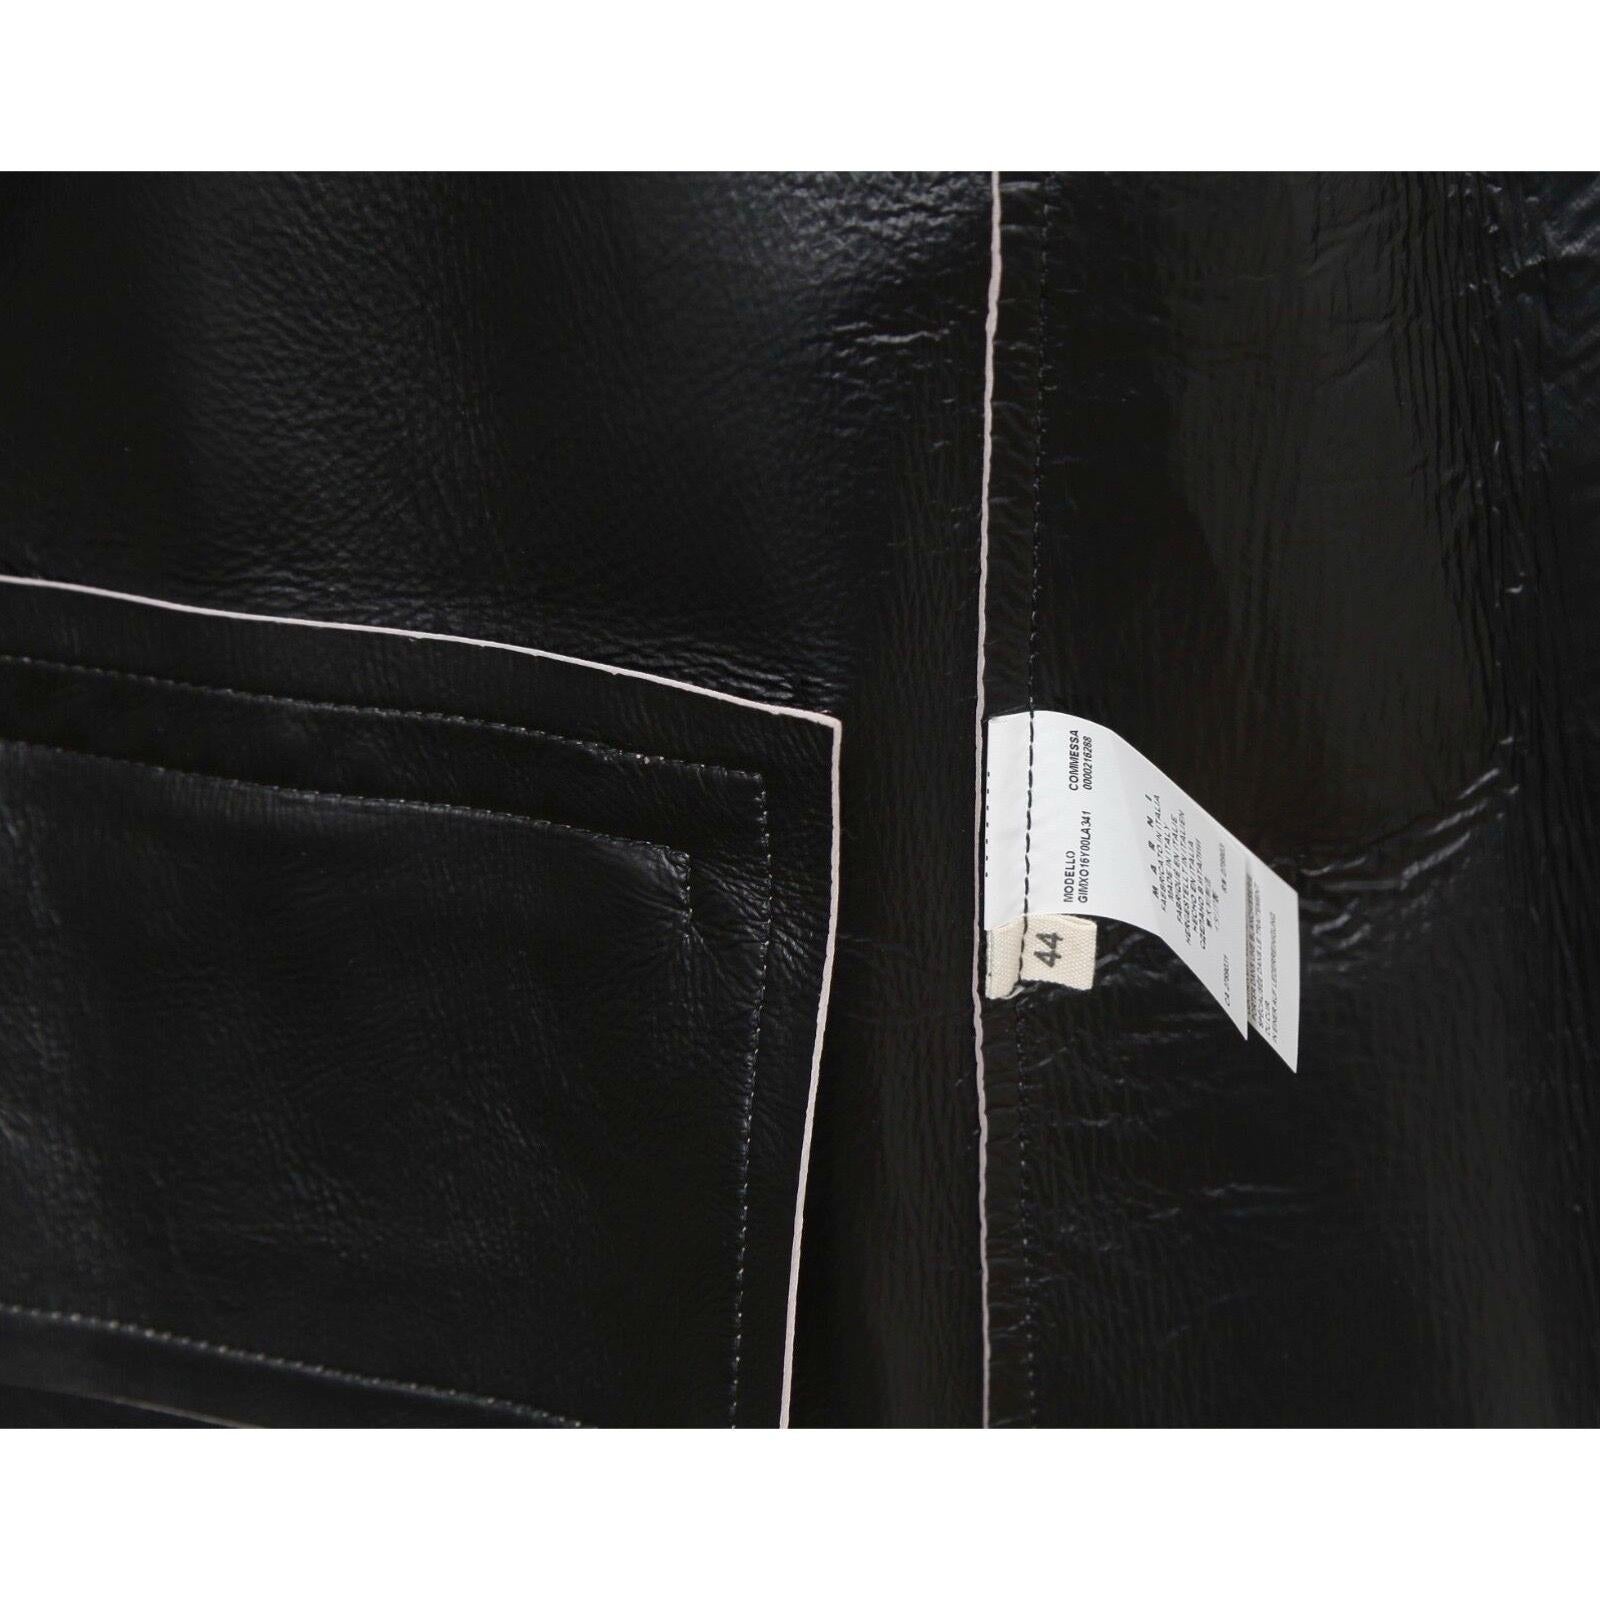 MARNI Jacket Leather Coat Blush Pink Black 3/4 Sleeve Pocket Sz 44 Summer 2014 For Sale 1